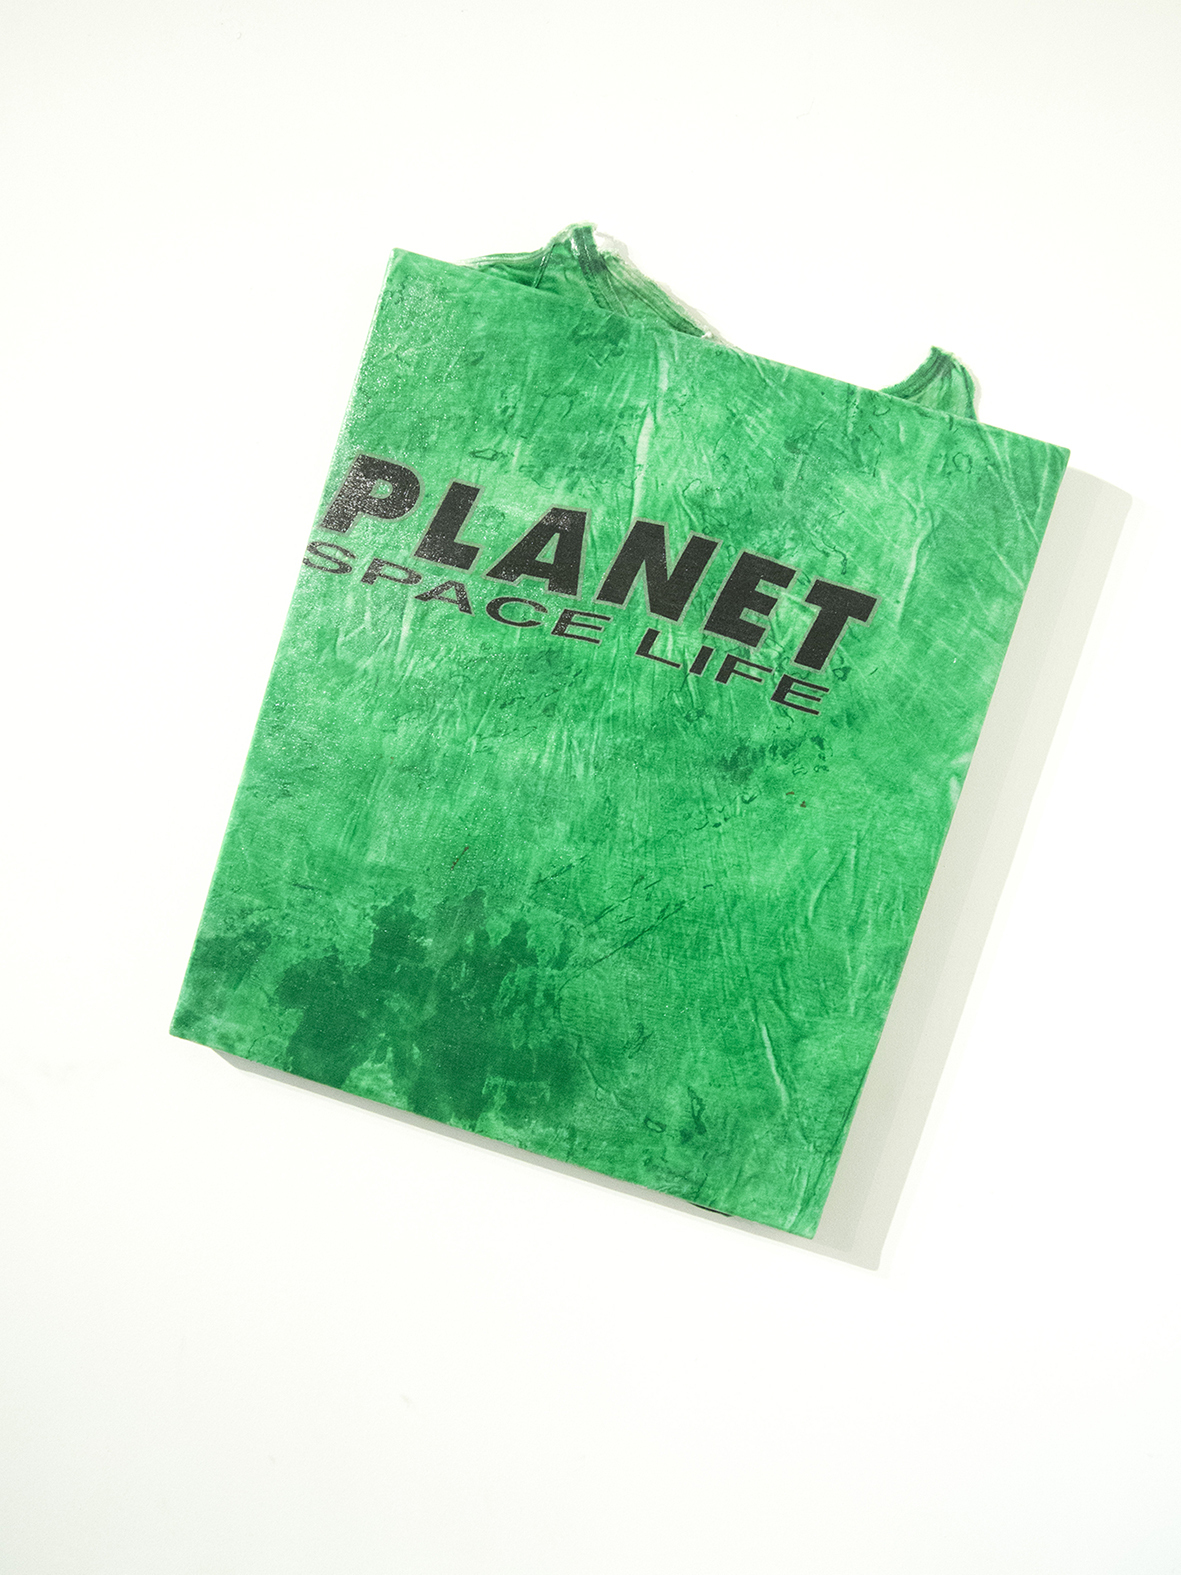 Assume vivid astro focus, « Peinture peinture « (Planet space life) (2020) artist’s T-shirt mounted on canvas, acrylic binder, 62 x 46 cm